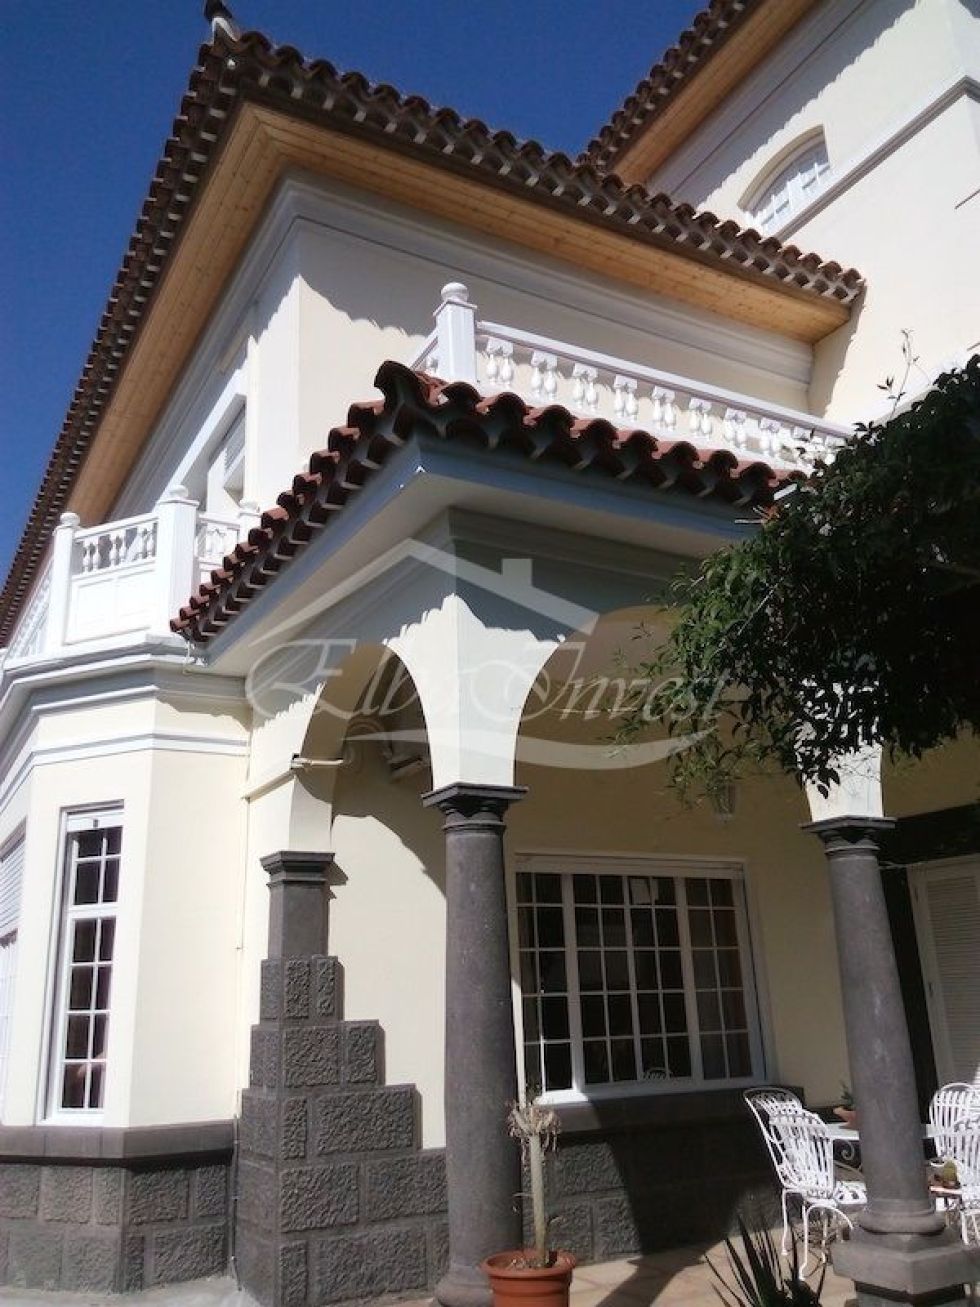 Semi-detached house for sale in  Santa Cruz de Tenerife, Spain - 2715